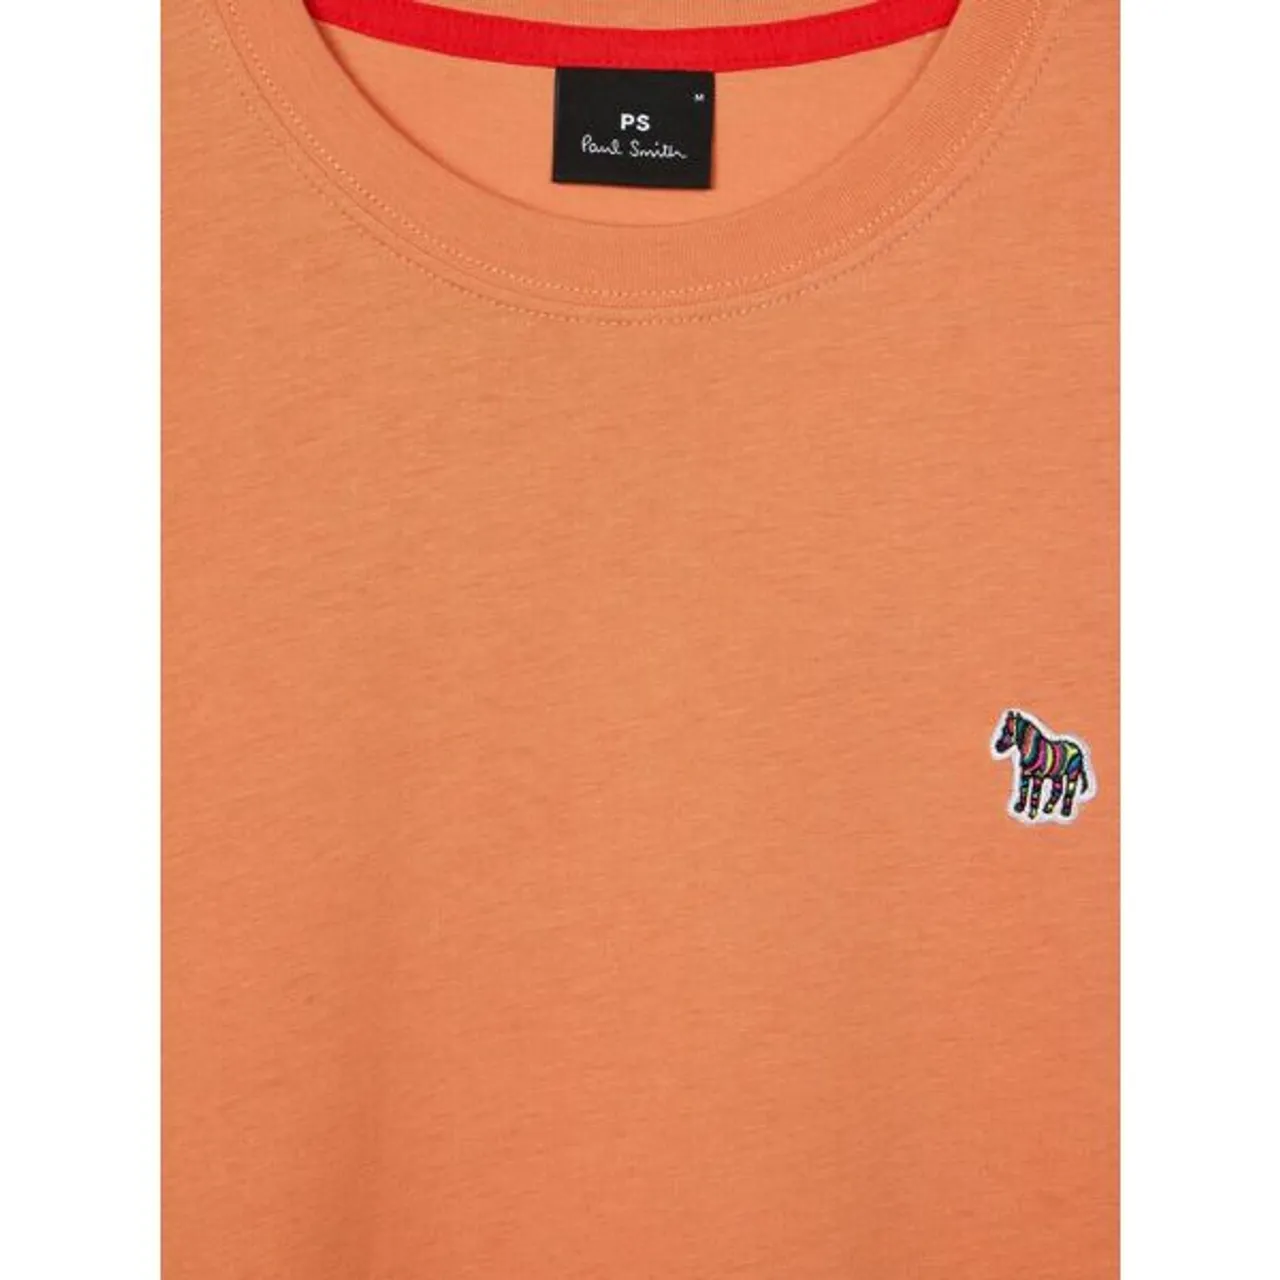 PS Paul Smith Zebra Logo Regular Fit Organic Cotton T-Shirt, Oranges - Oranges - Male